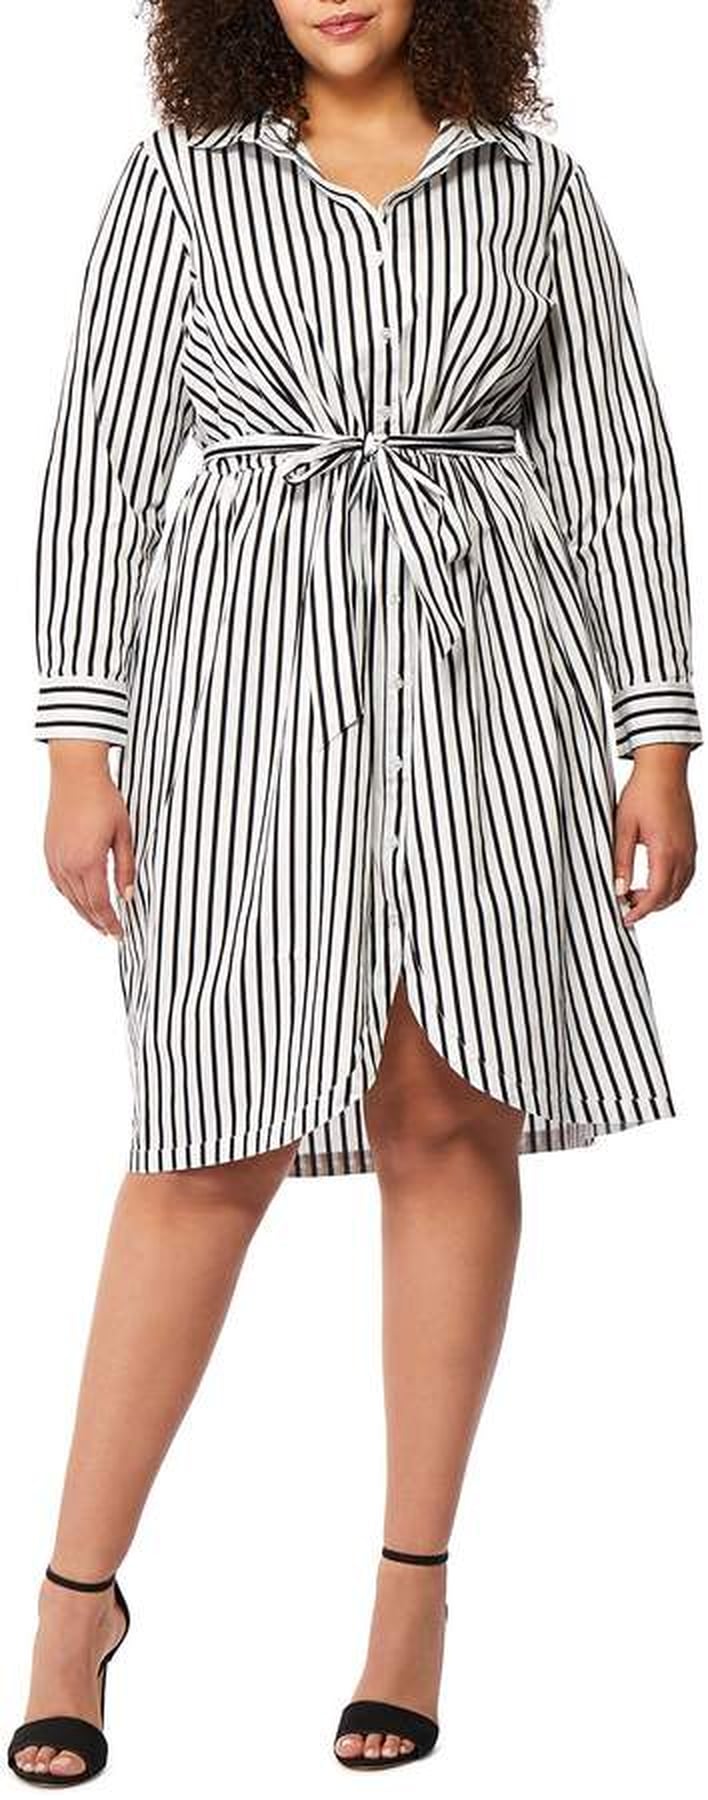 Meghan Markle Altuzarra Striped Dress | POPSUGAR Fashion